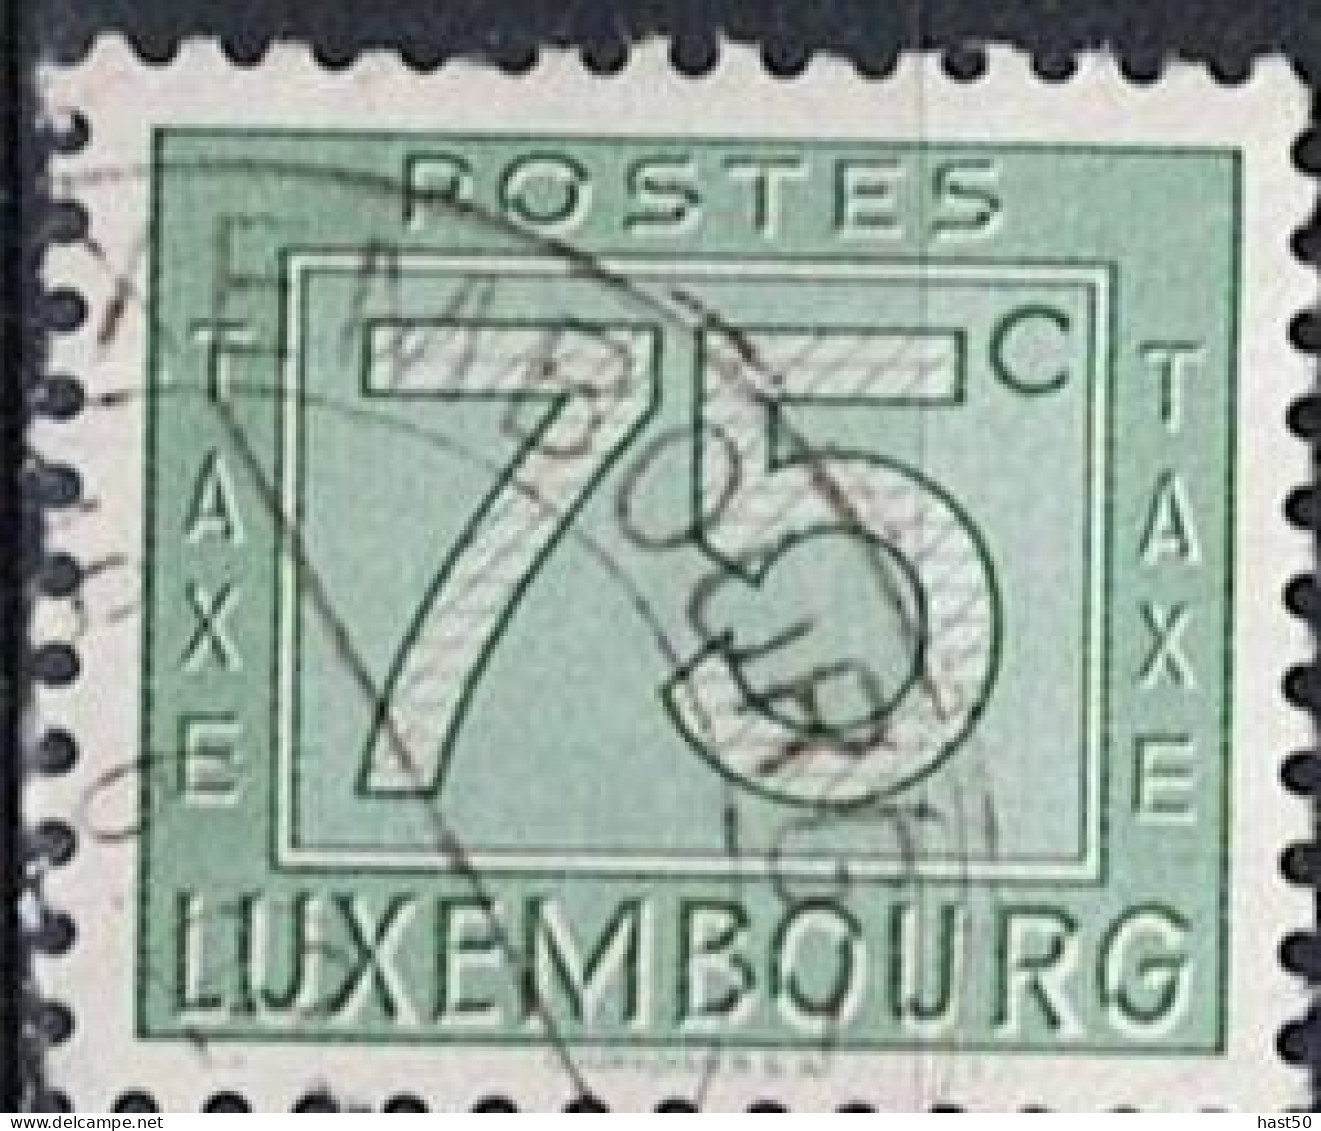 Luxemburg - PortoTaxe (MiNr: P 29) 1947 - Gest Used Obl - Portomarken